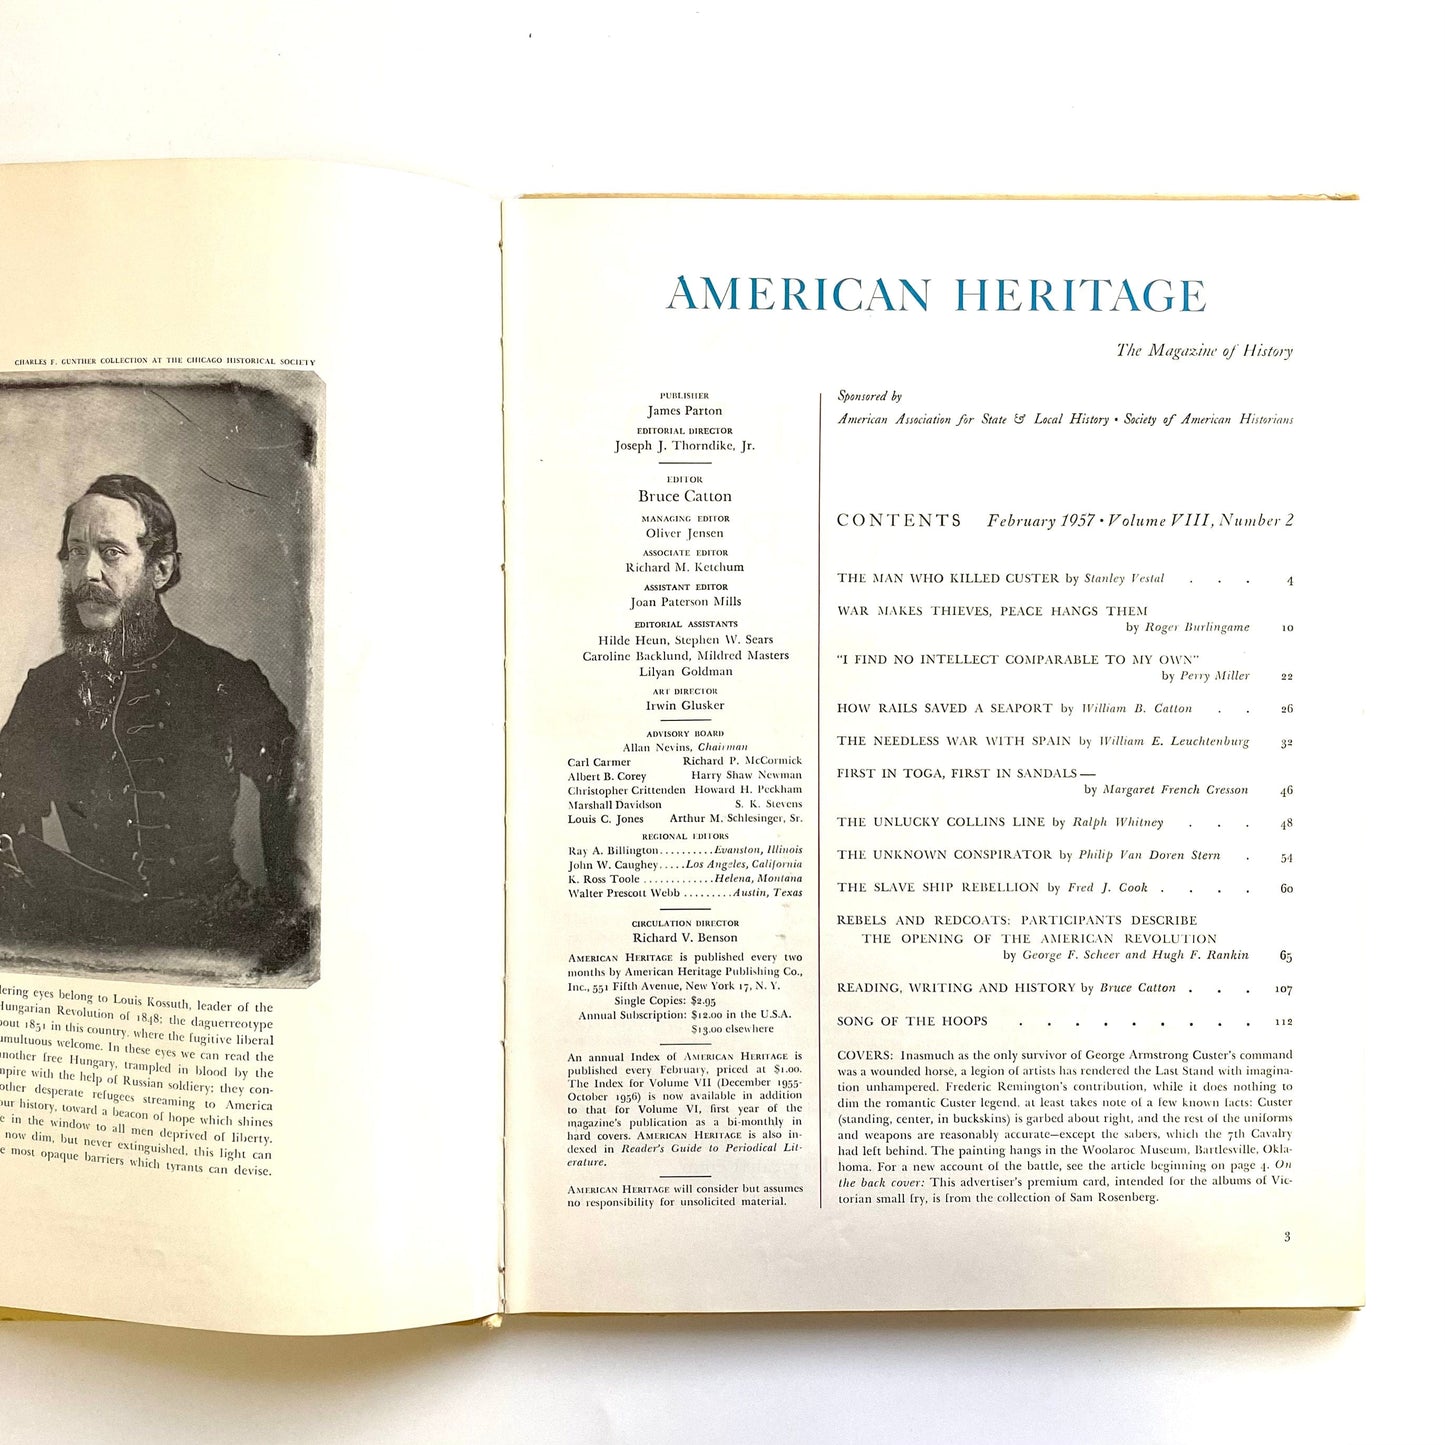 Vintage American Heritage Volume VIII No 2 February 1957 Hardcover History Book